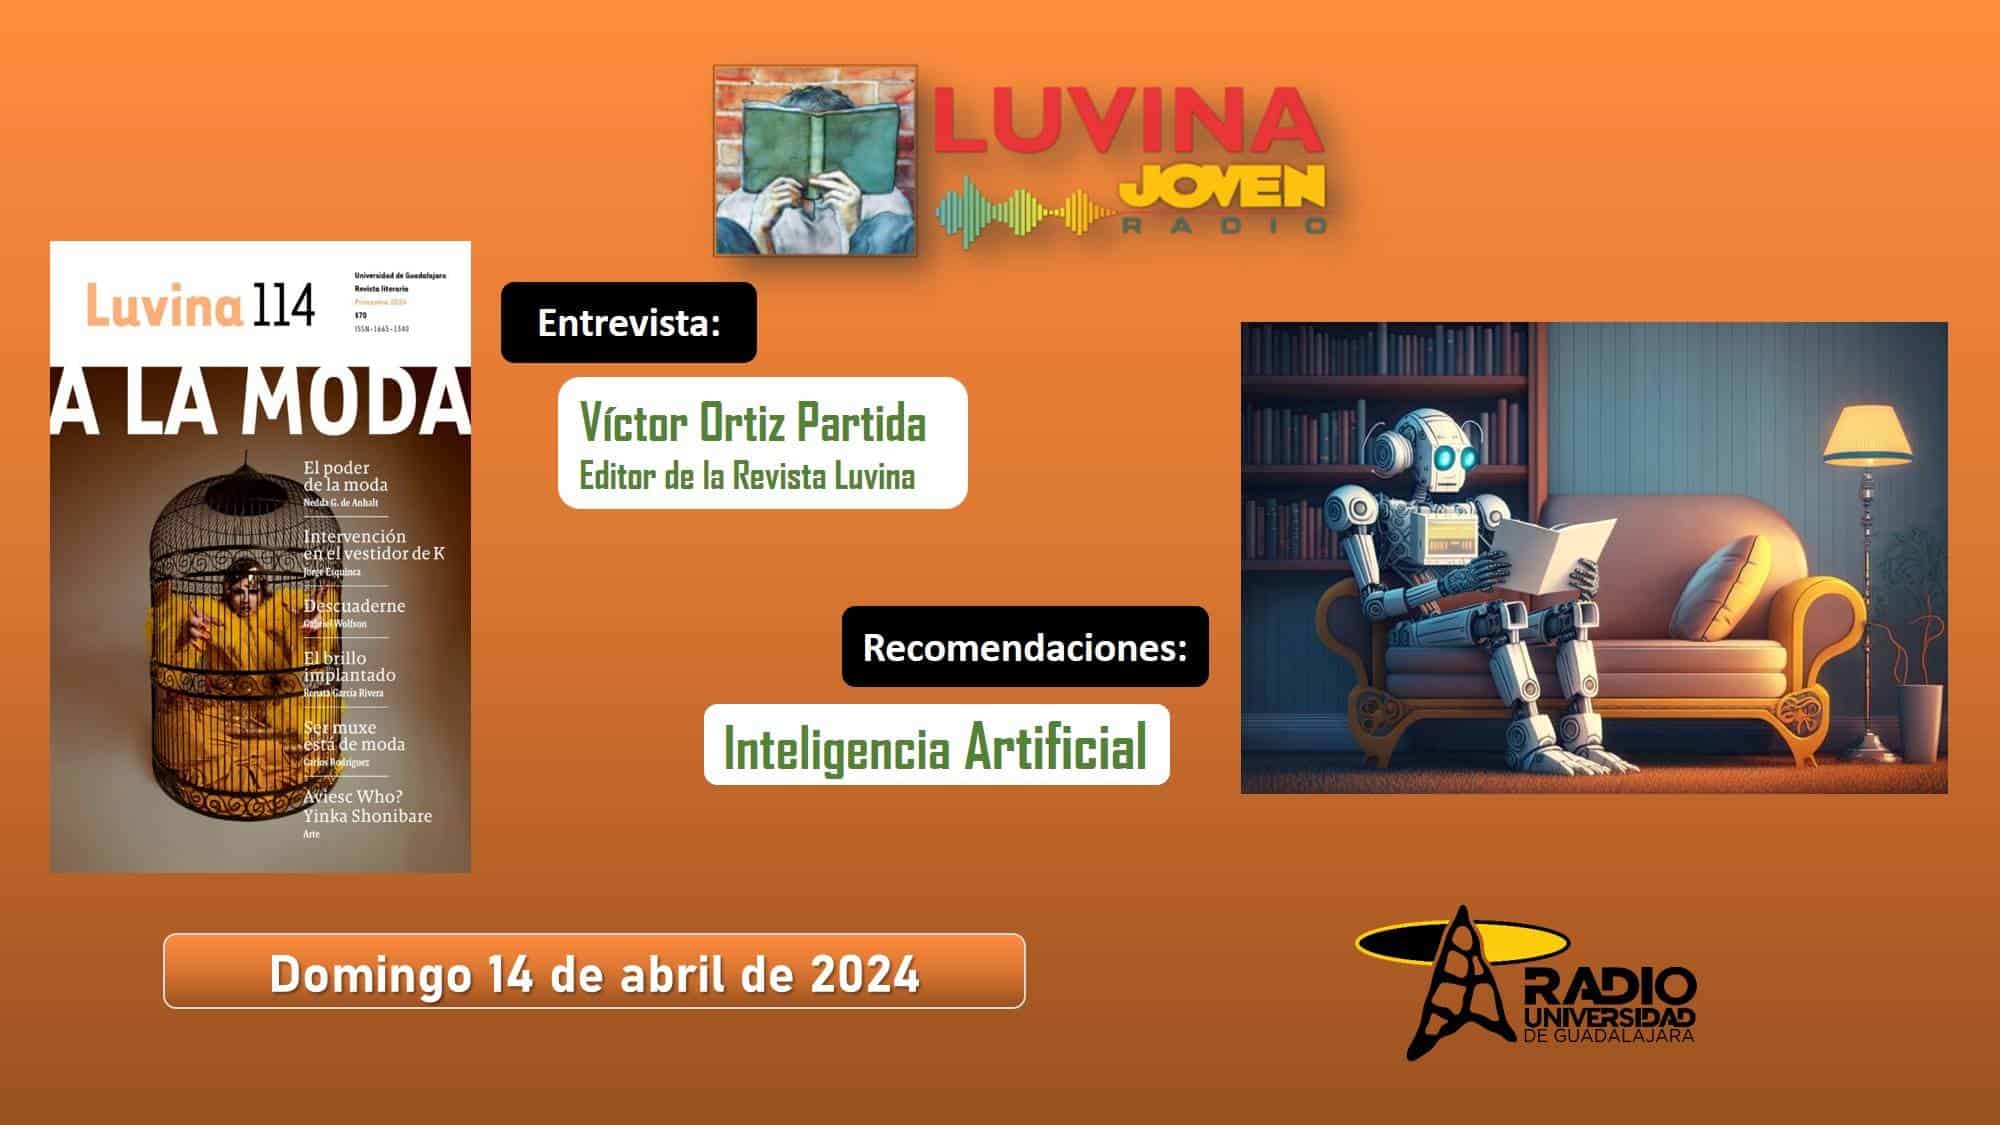 Inteligencia artificial. Revista Luvina 114. Luvina Joven Radio 14 abril 2024